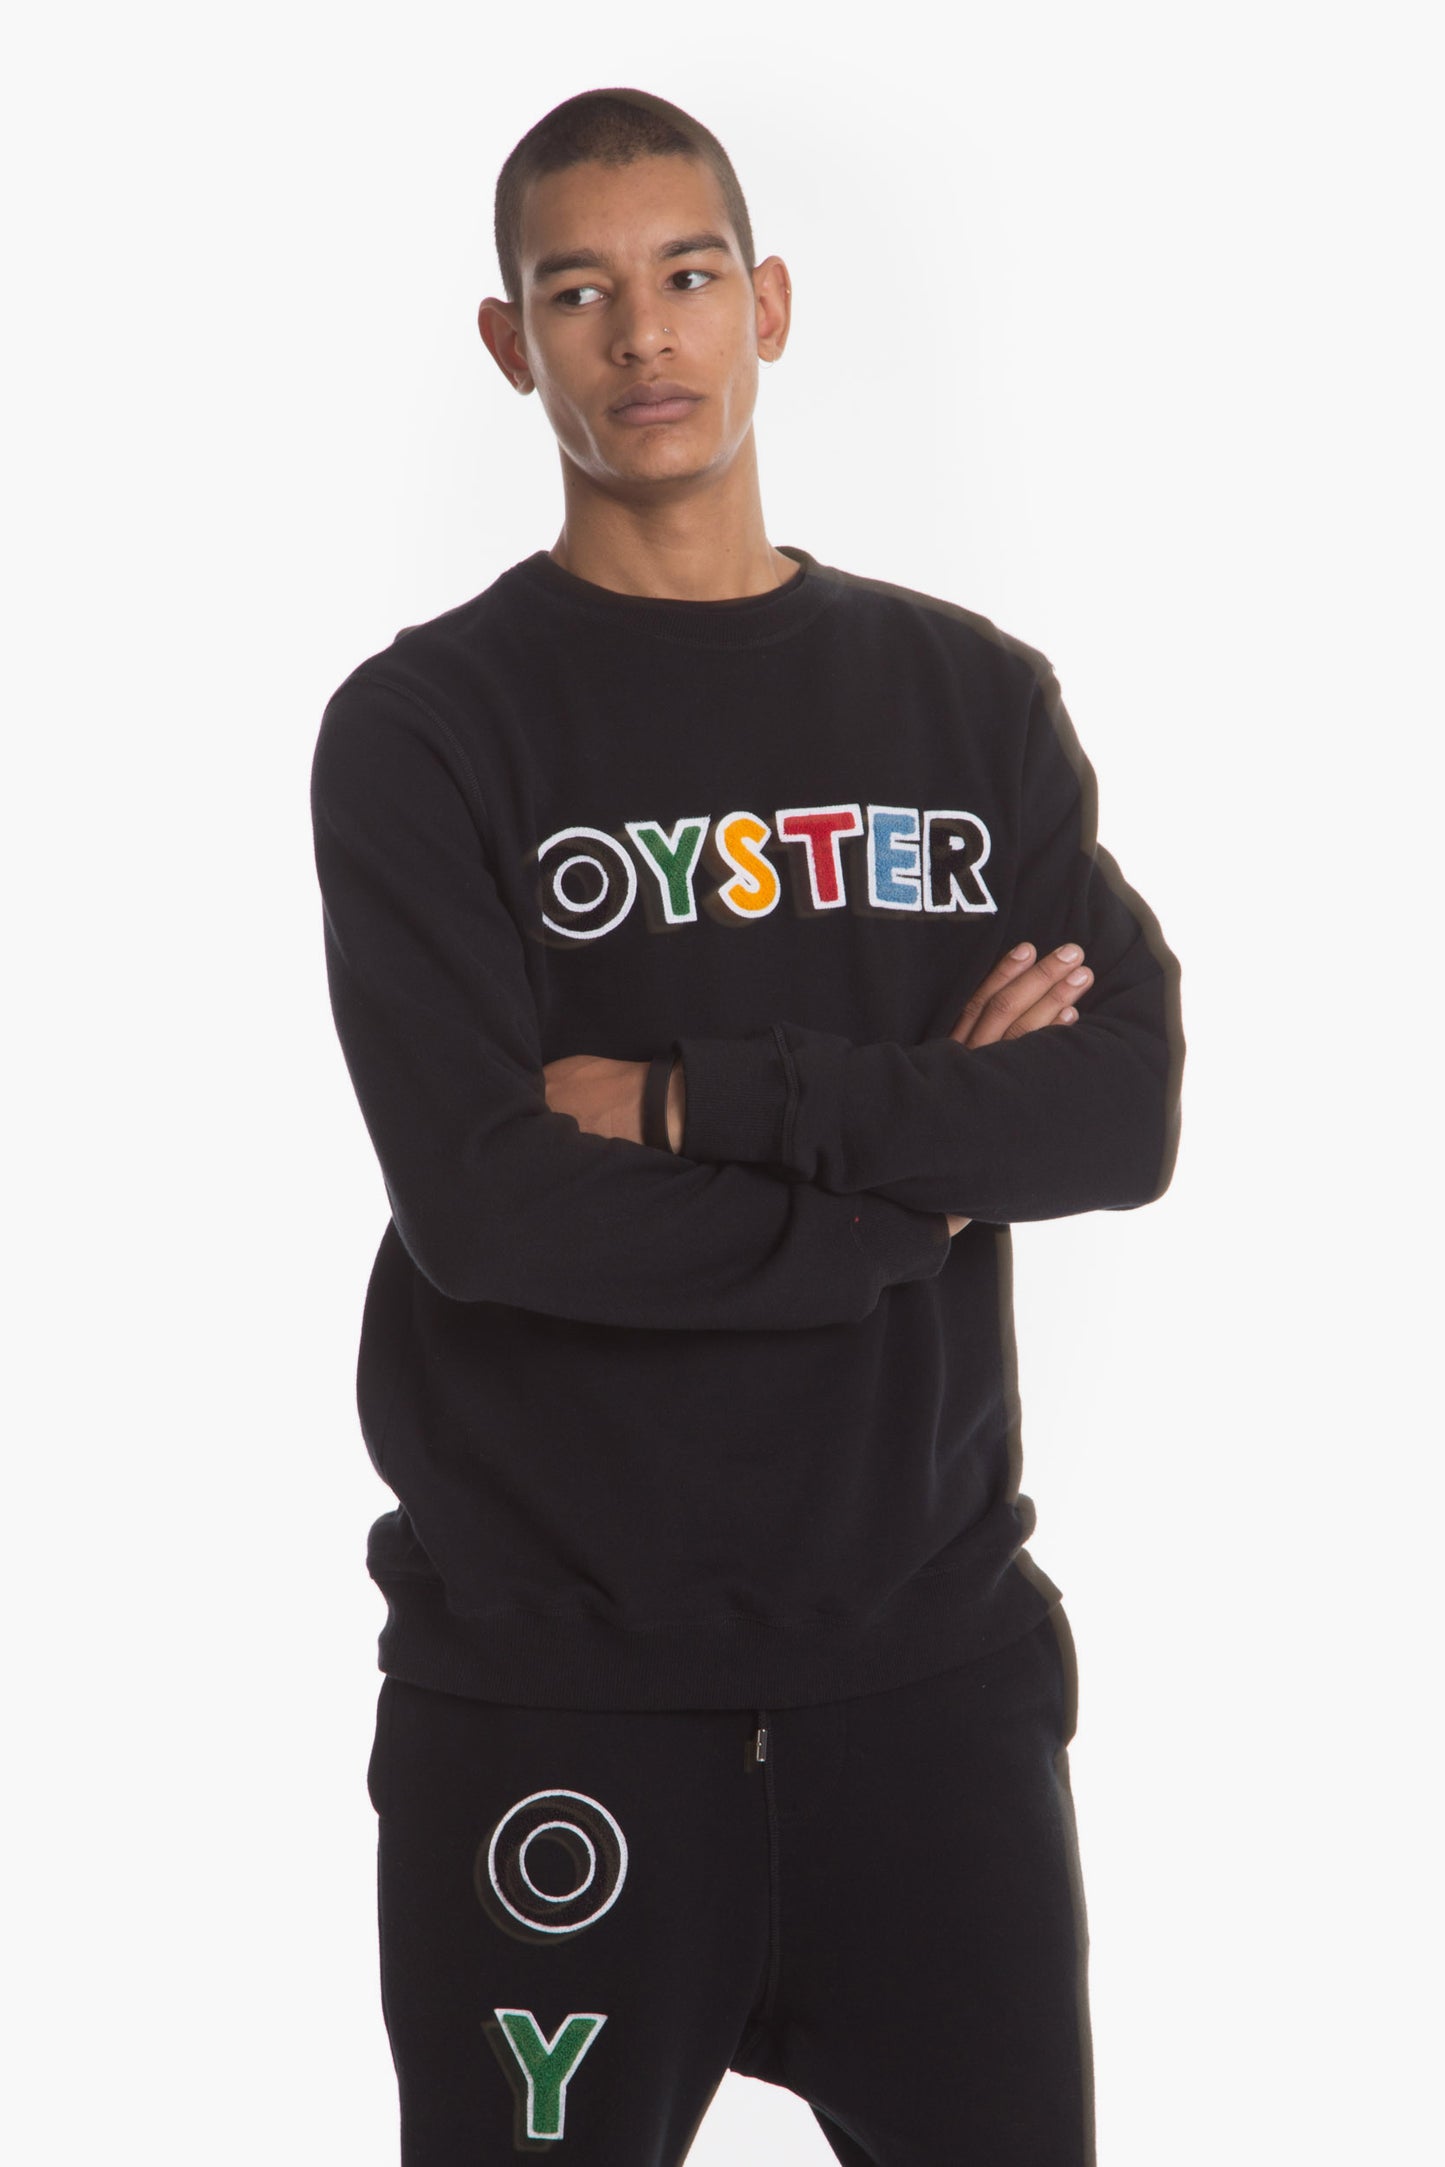 I Oyster  logo chenille crewneck sweatshirt ( black )